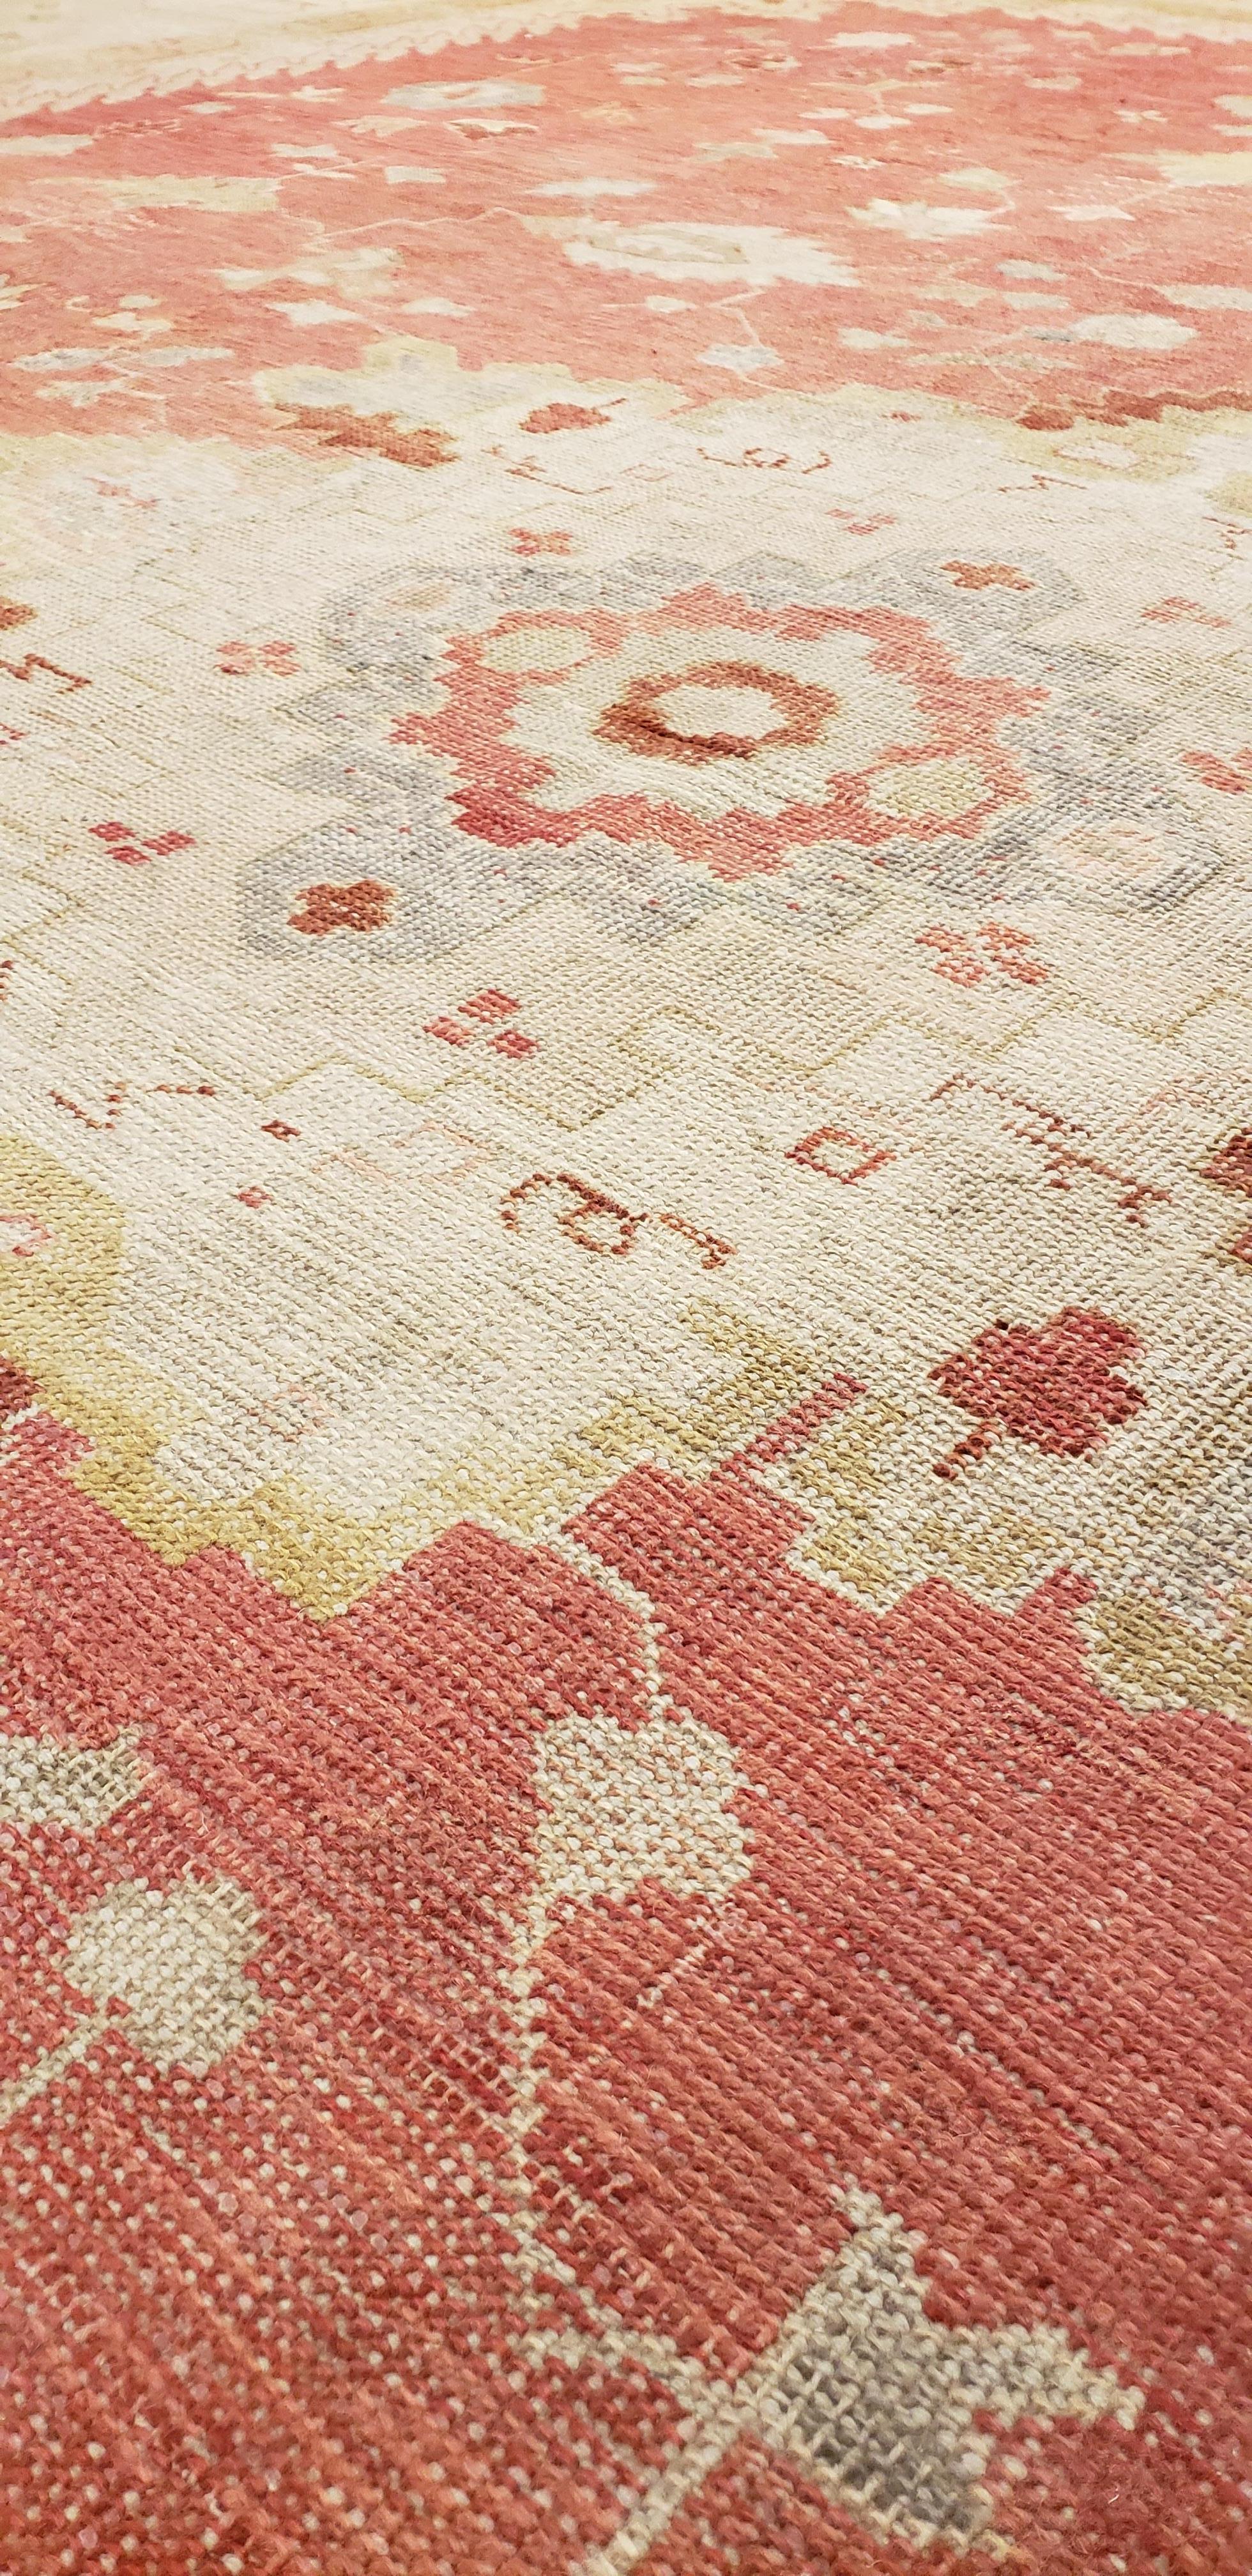 Antique Oushak Carpet, Handmade Turkish Oriental Rug, Beige, Coral, Soft Colors For Sale 10